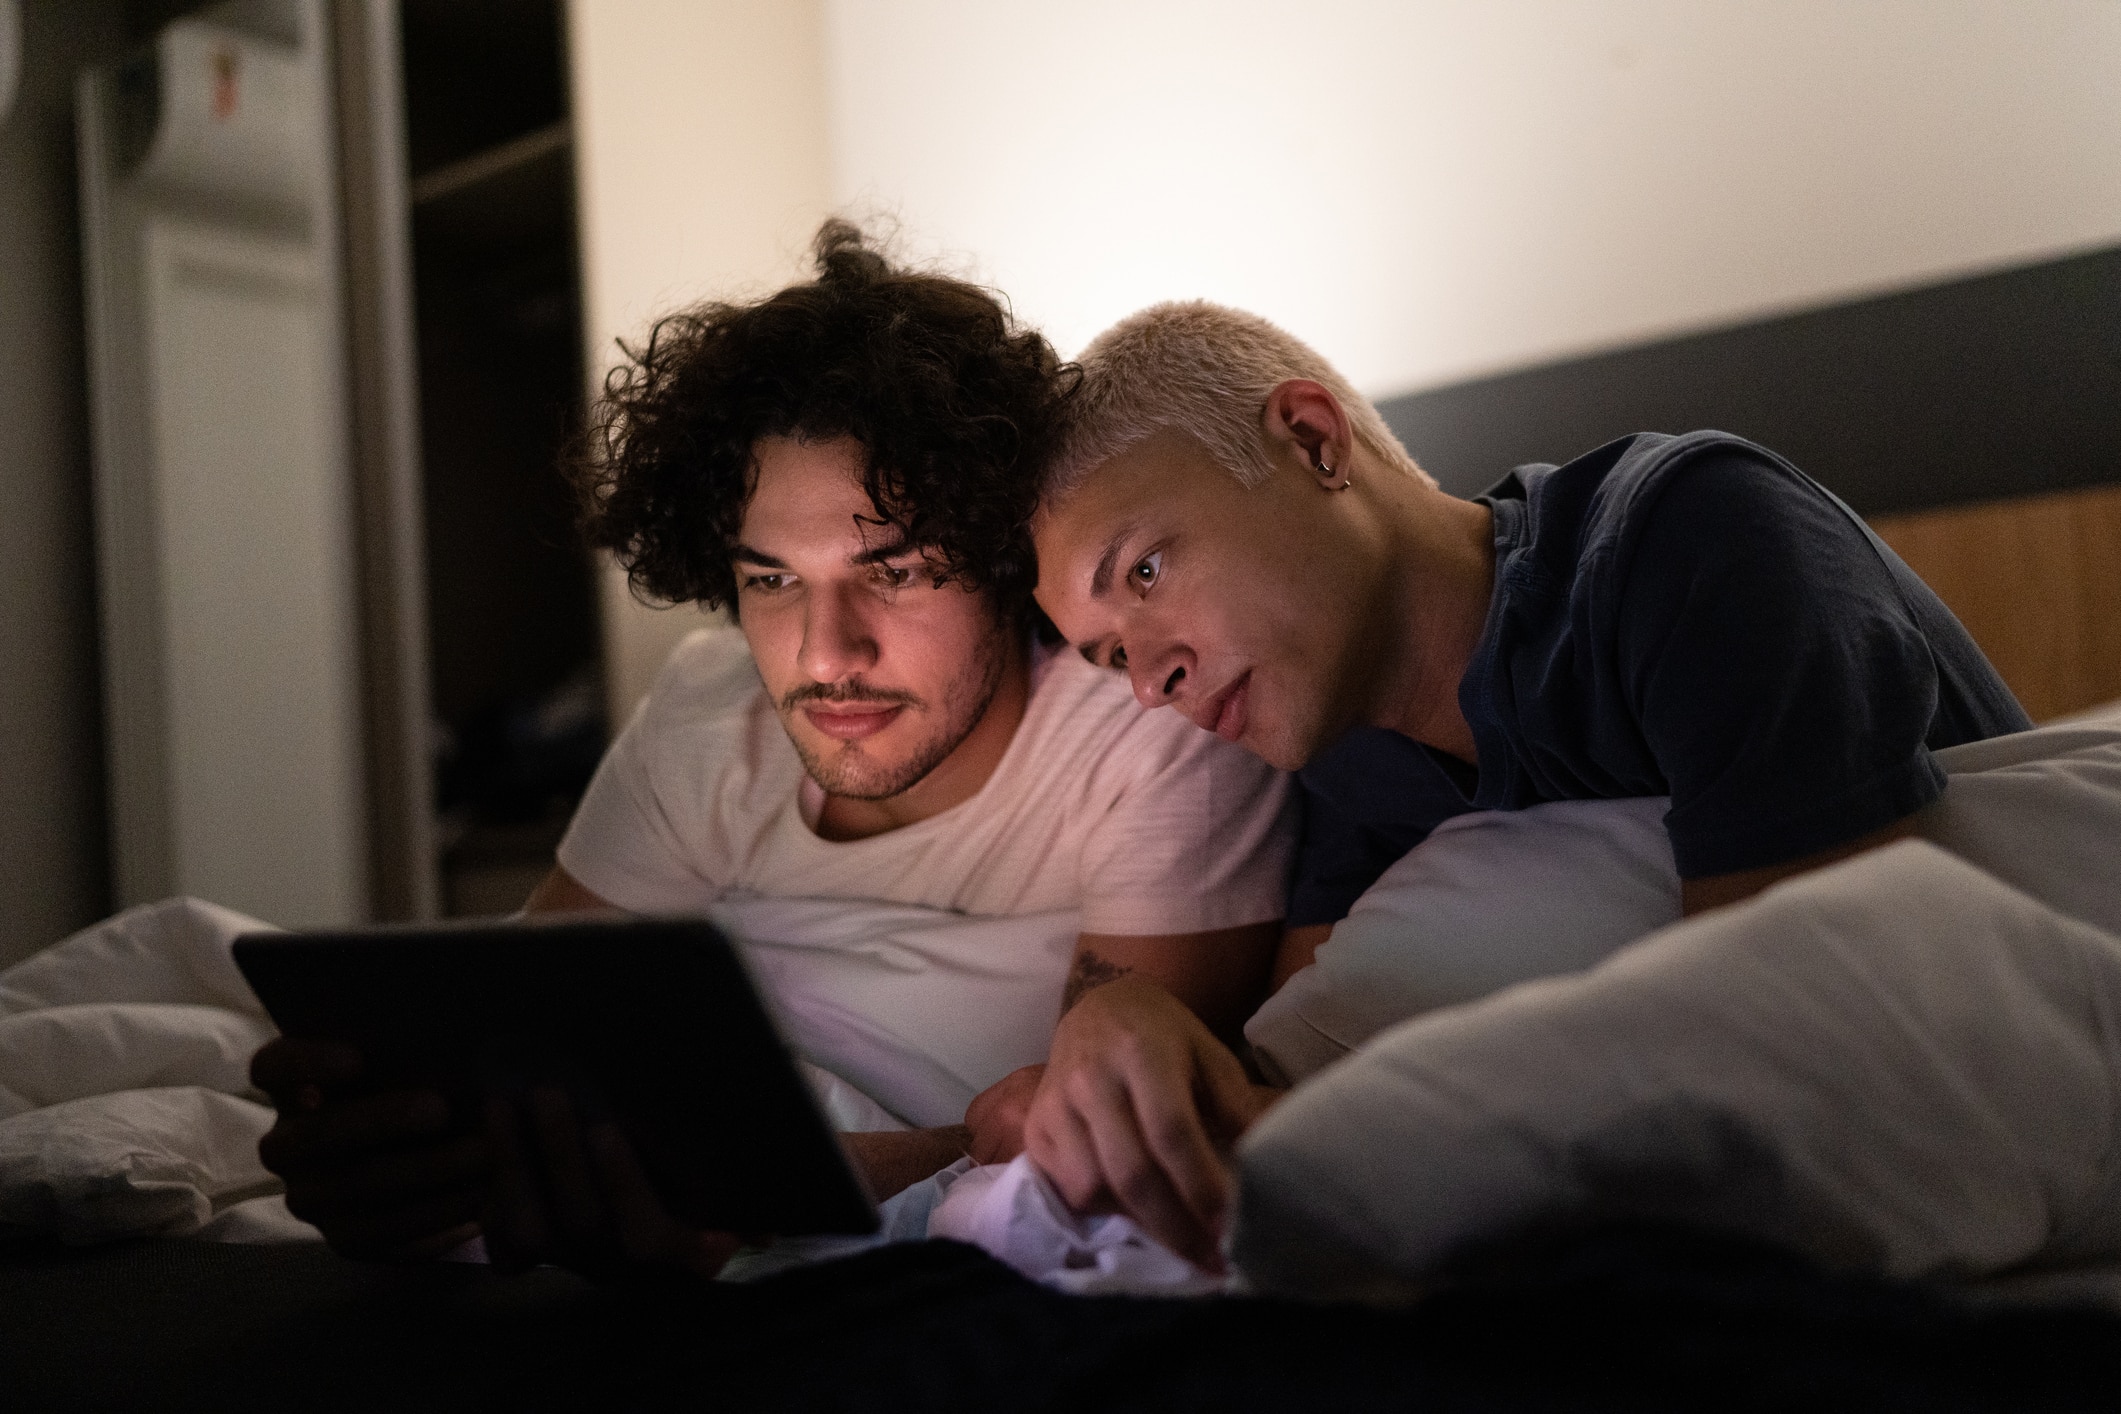 two men looking up resources online